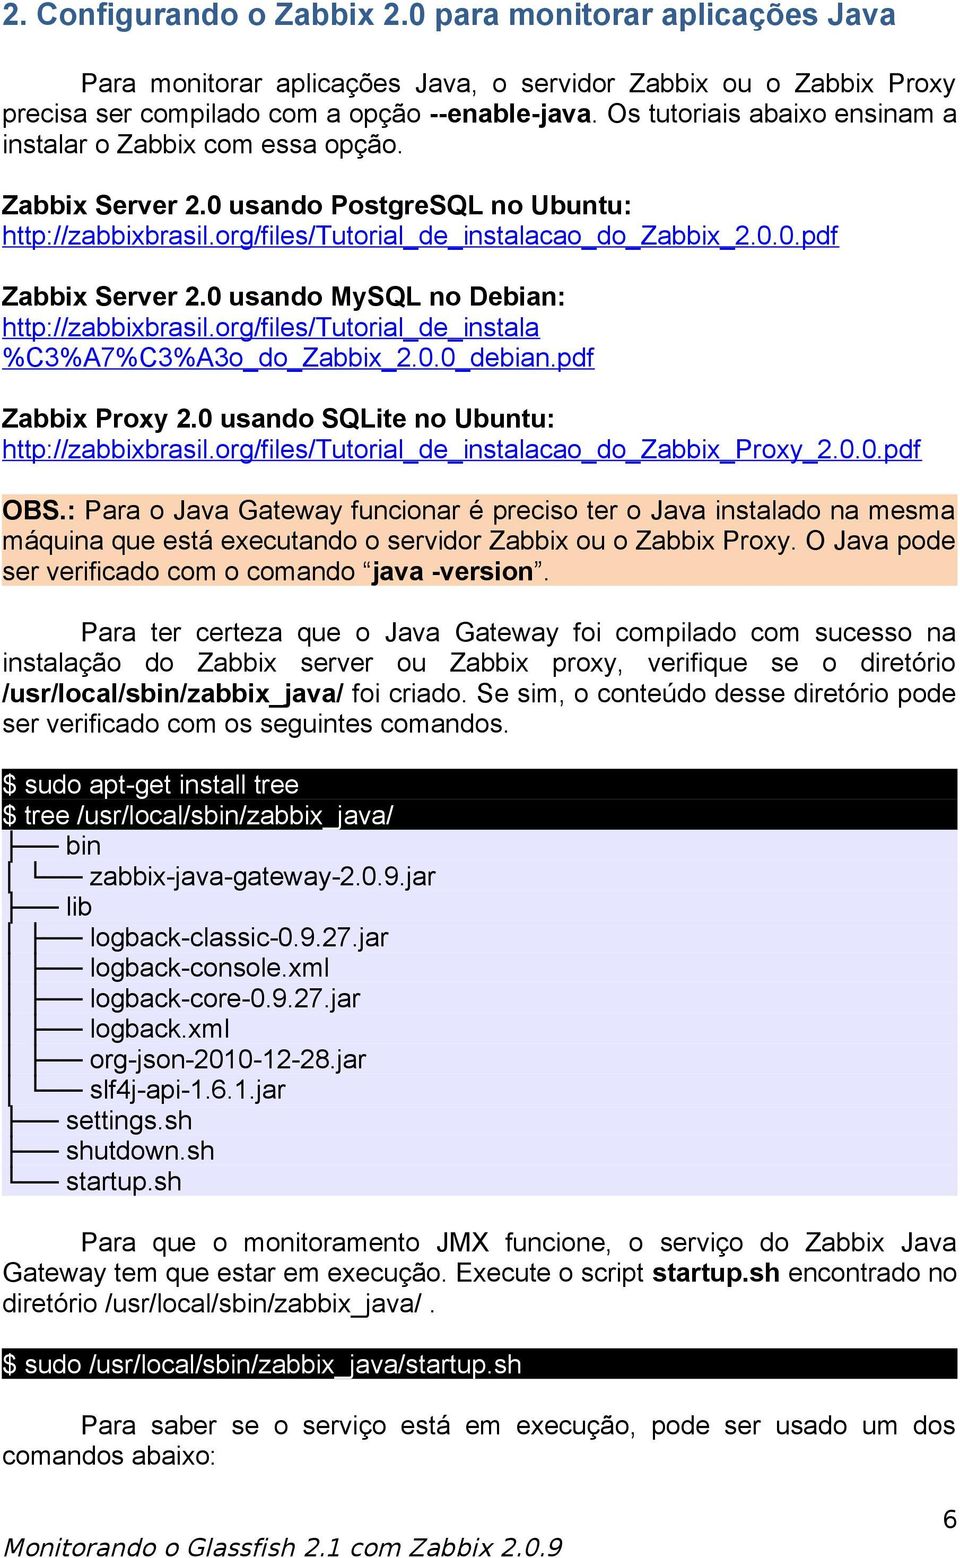 0 usando MySQL no Debian: http://zabbixbrasil.org/files/tutorial_de_instala %C3%A7%C3%A3o_do_Zabbix_2.0.0_debian.pdf Zabbix Proxy 2.0 usando SQLite no Ubuntu: http://zabbixbrasil.